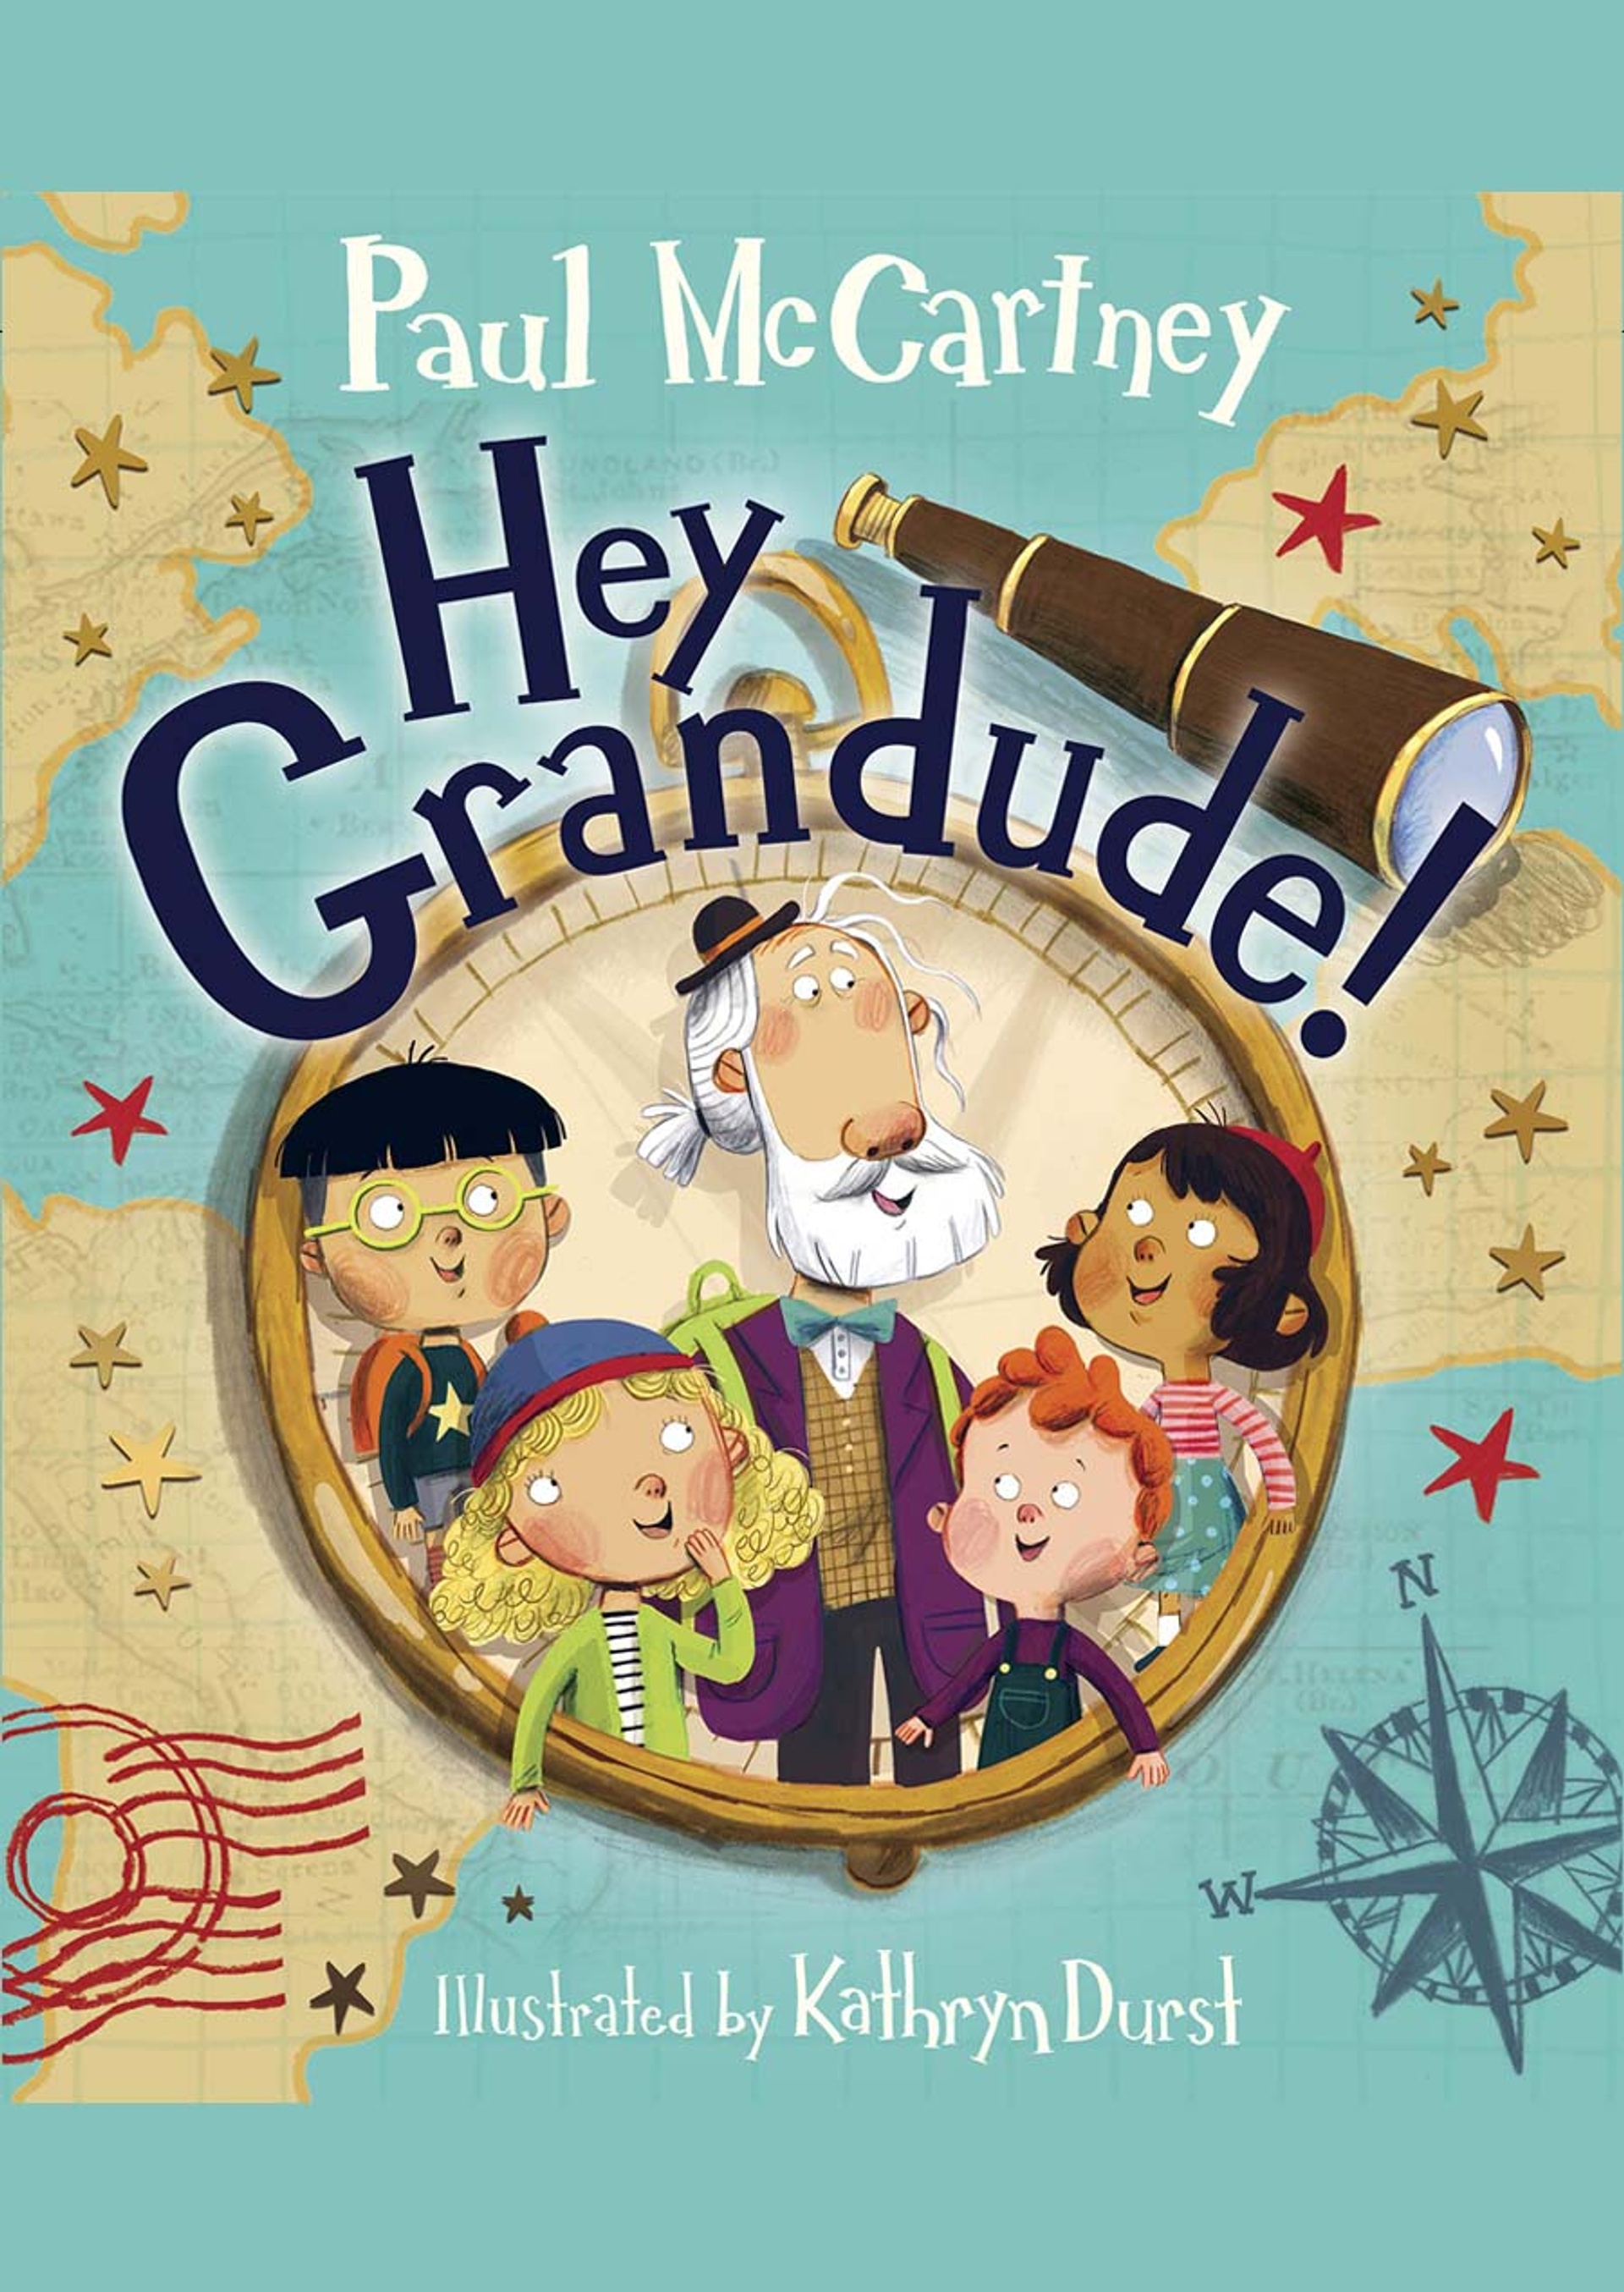 Book cover for Paul McCartney's Hey Grandude!